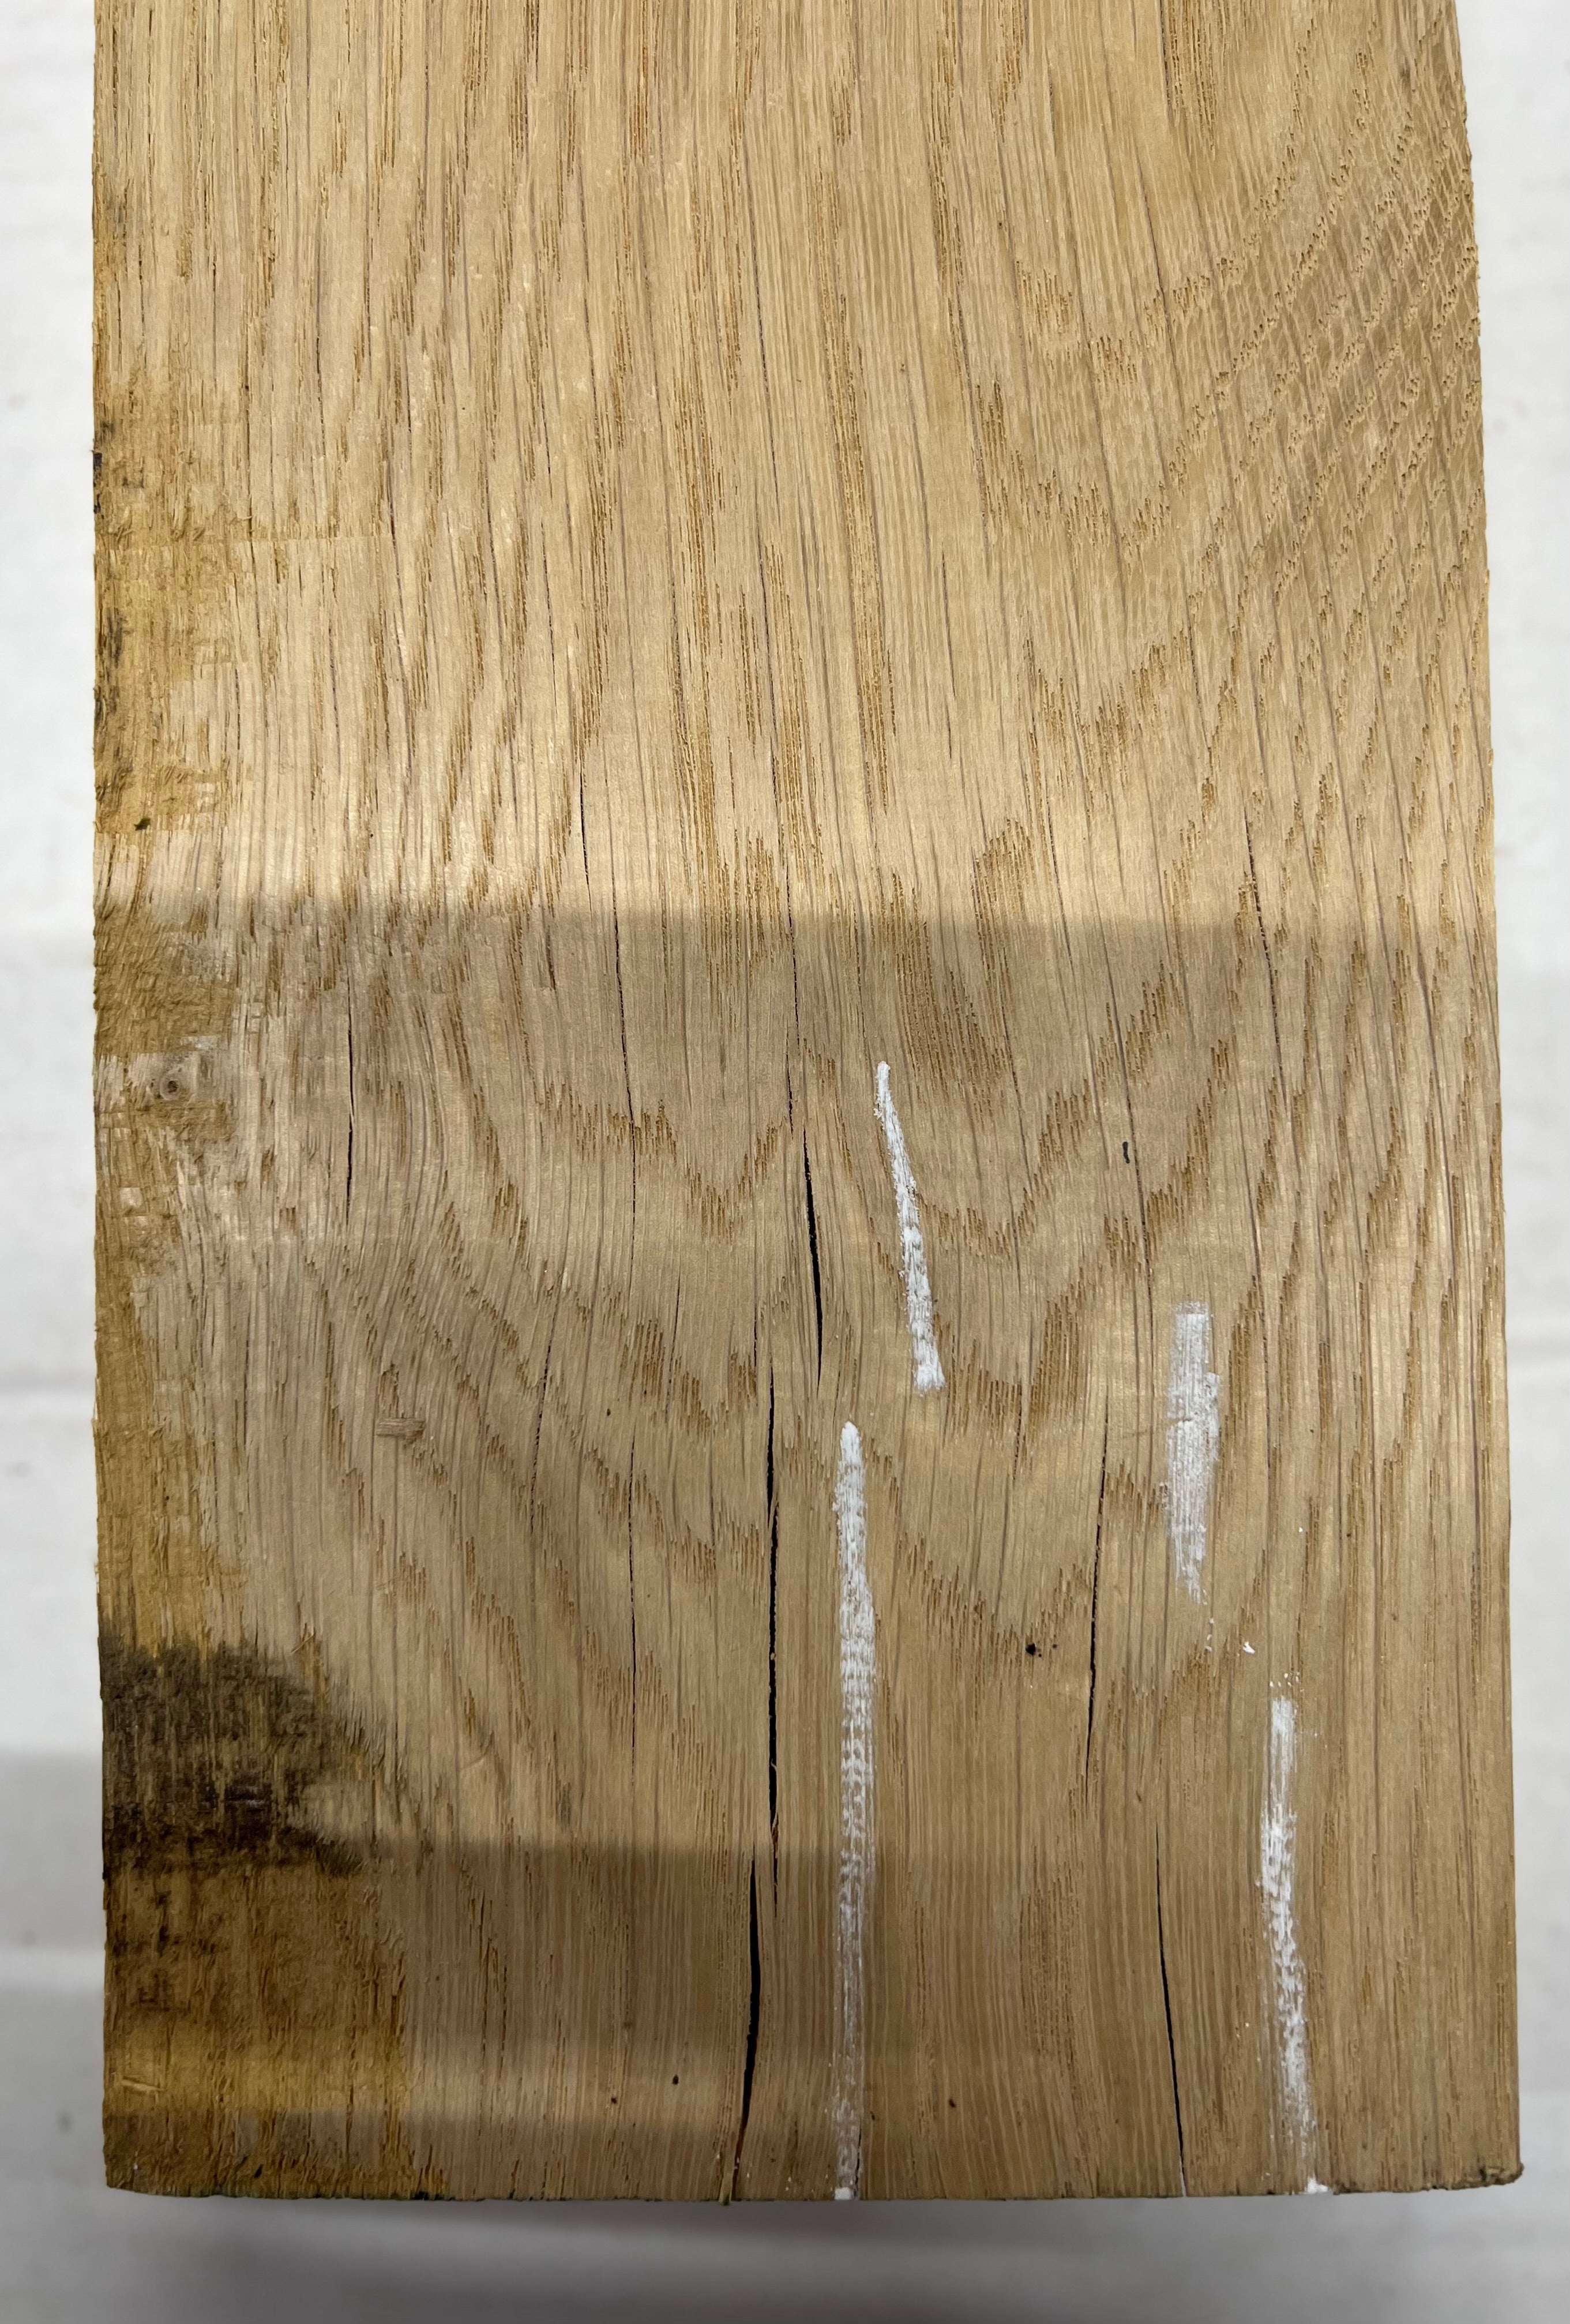 White Oak Lumber Board Square Wood Blank 42&quot;x5-1/2&quot;x7/8&quot;  